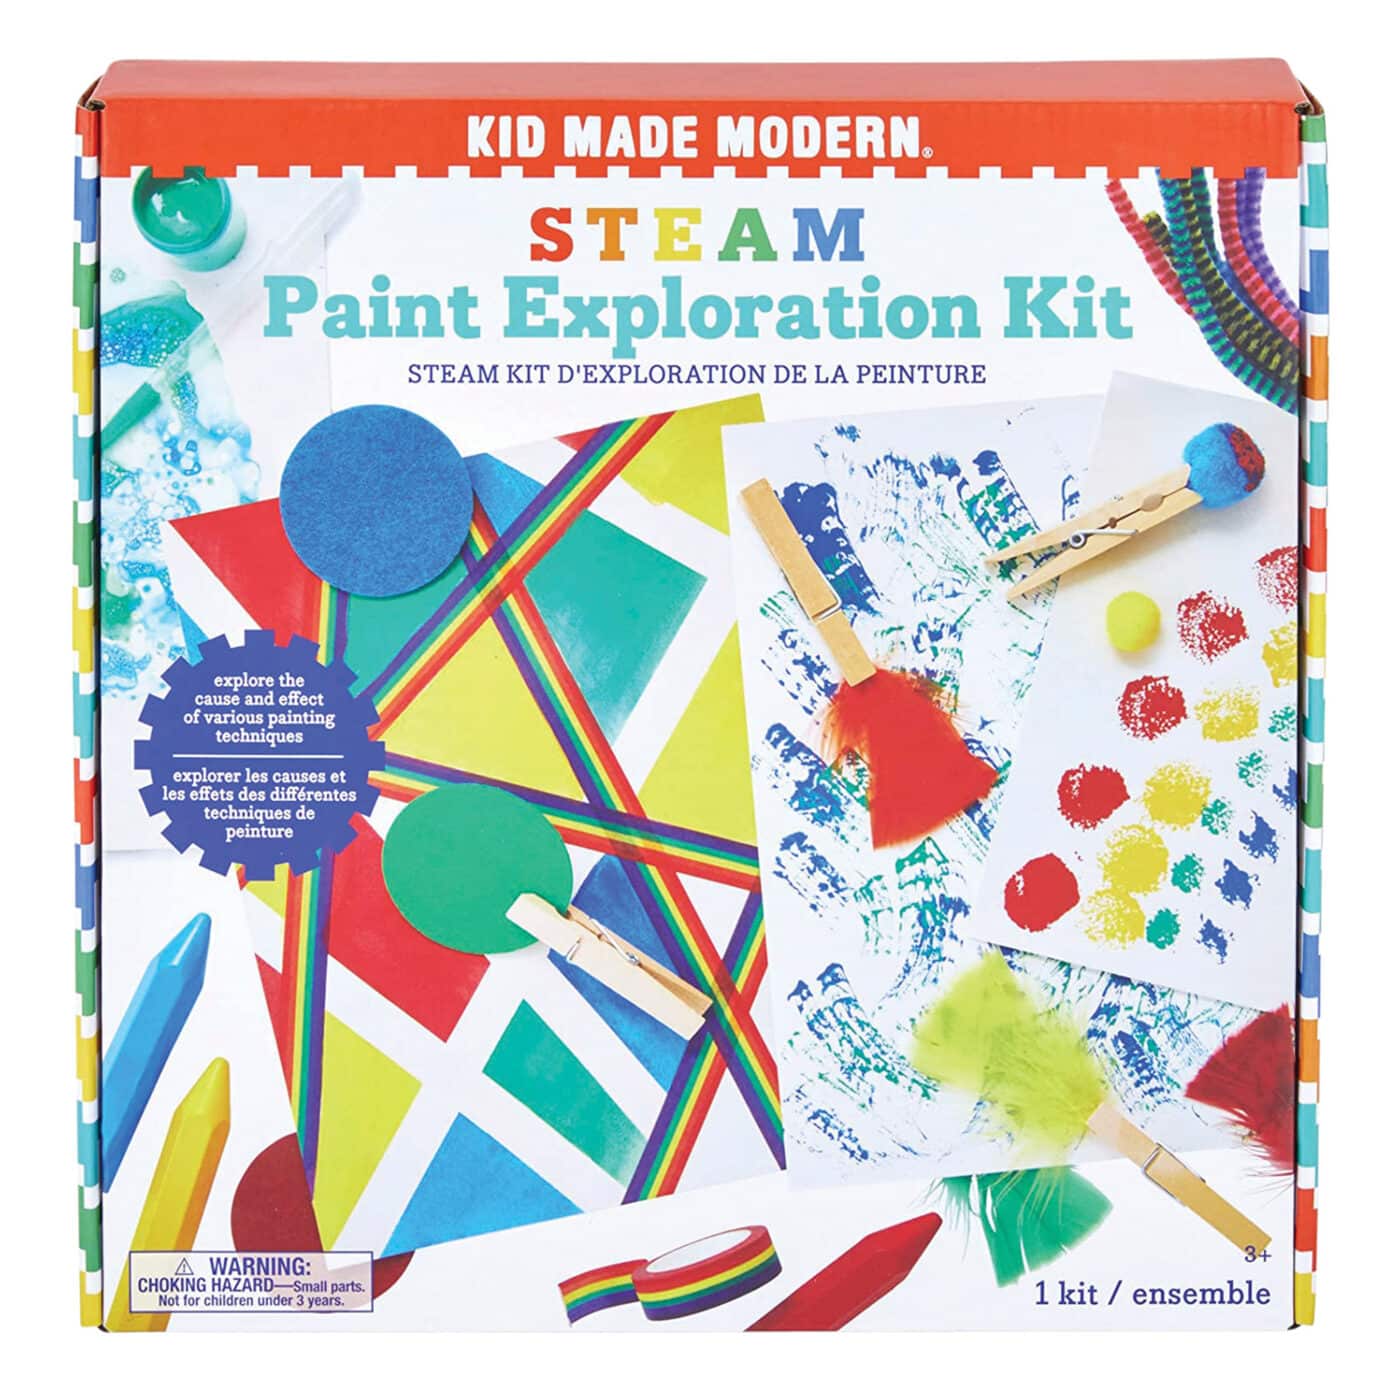 Kid Made Modern STEAM Paint Exploration Kit